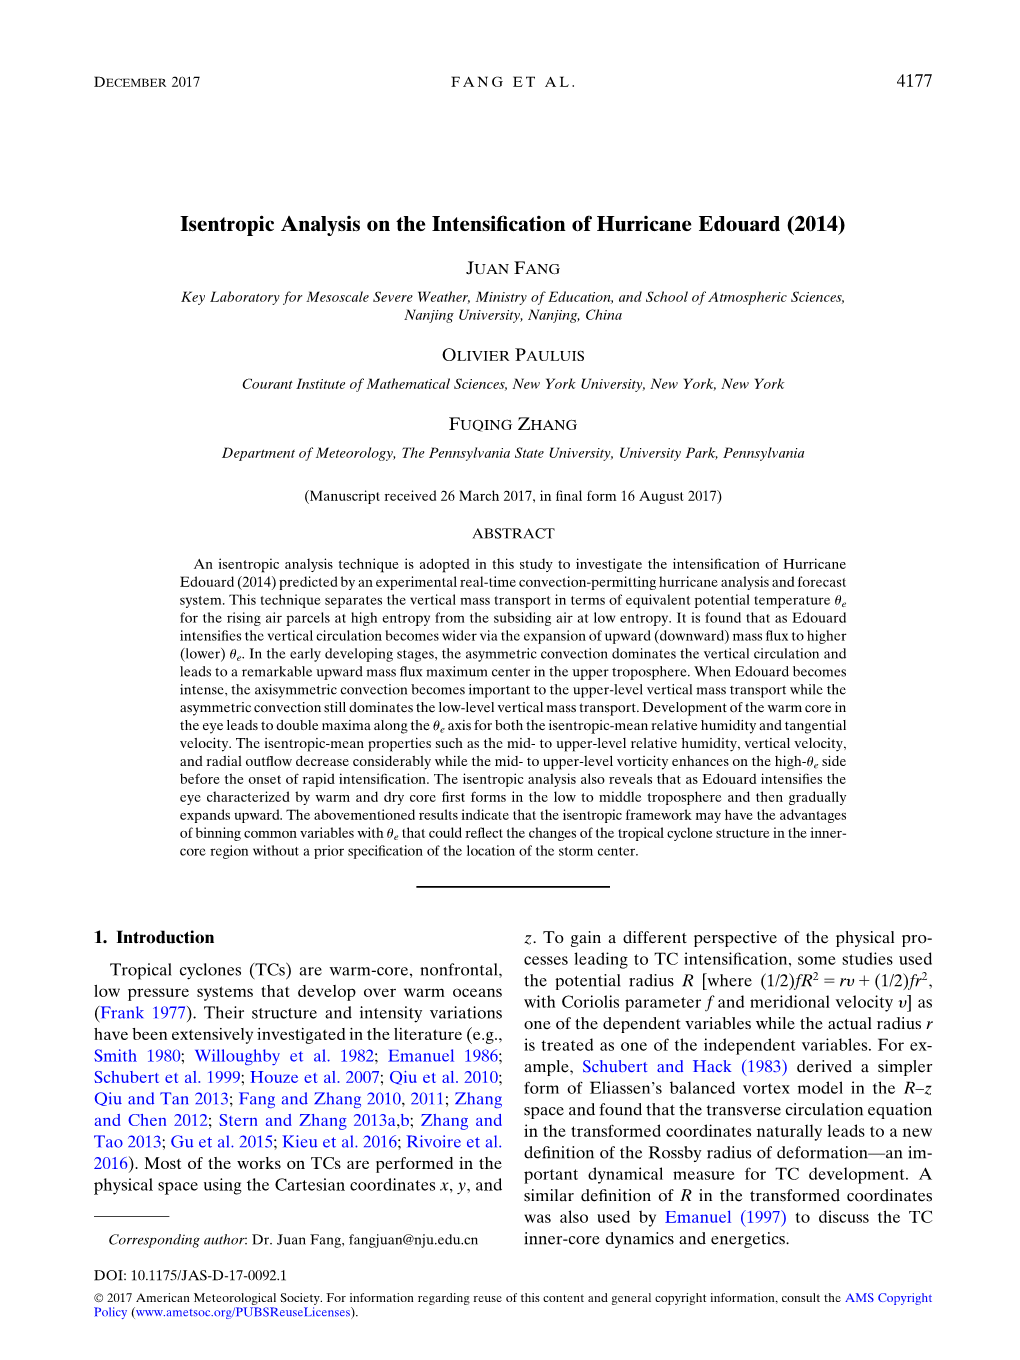 Isentropic Analysis on the Intensification of Hurricane Edouard